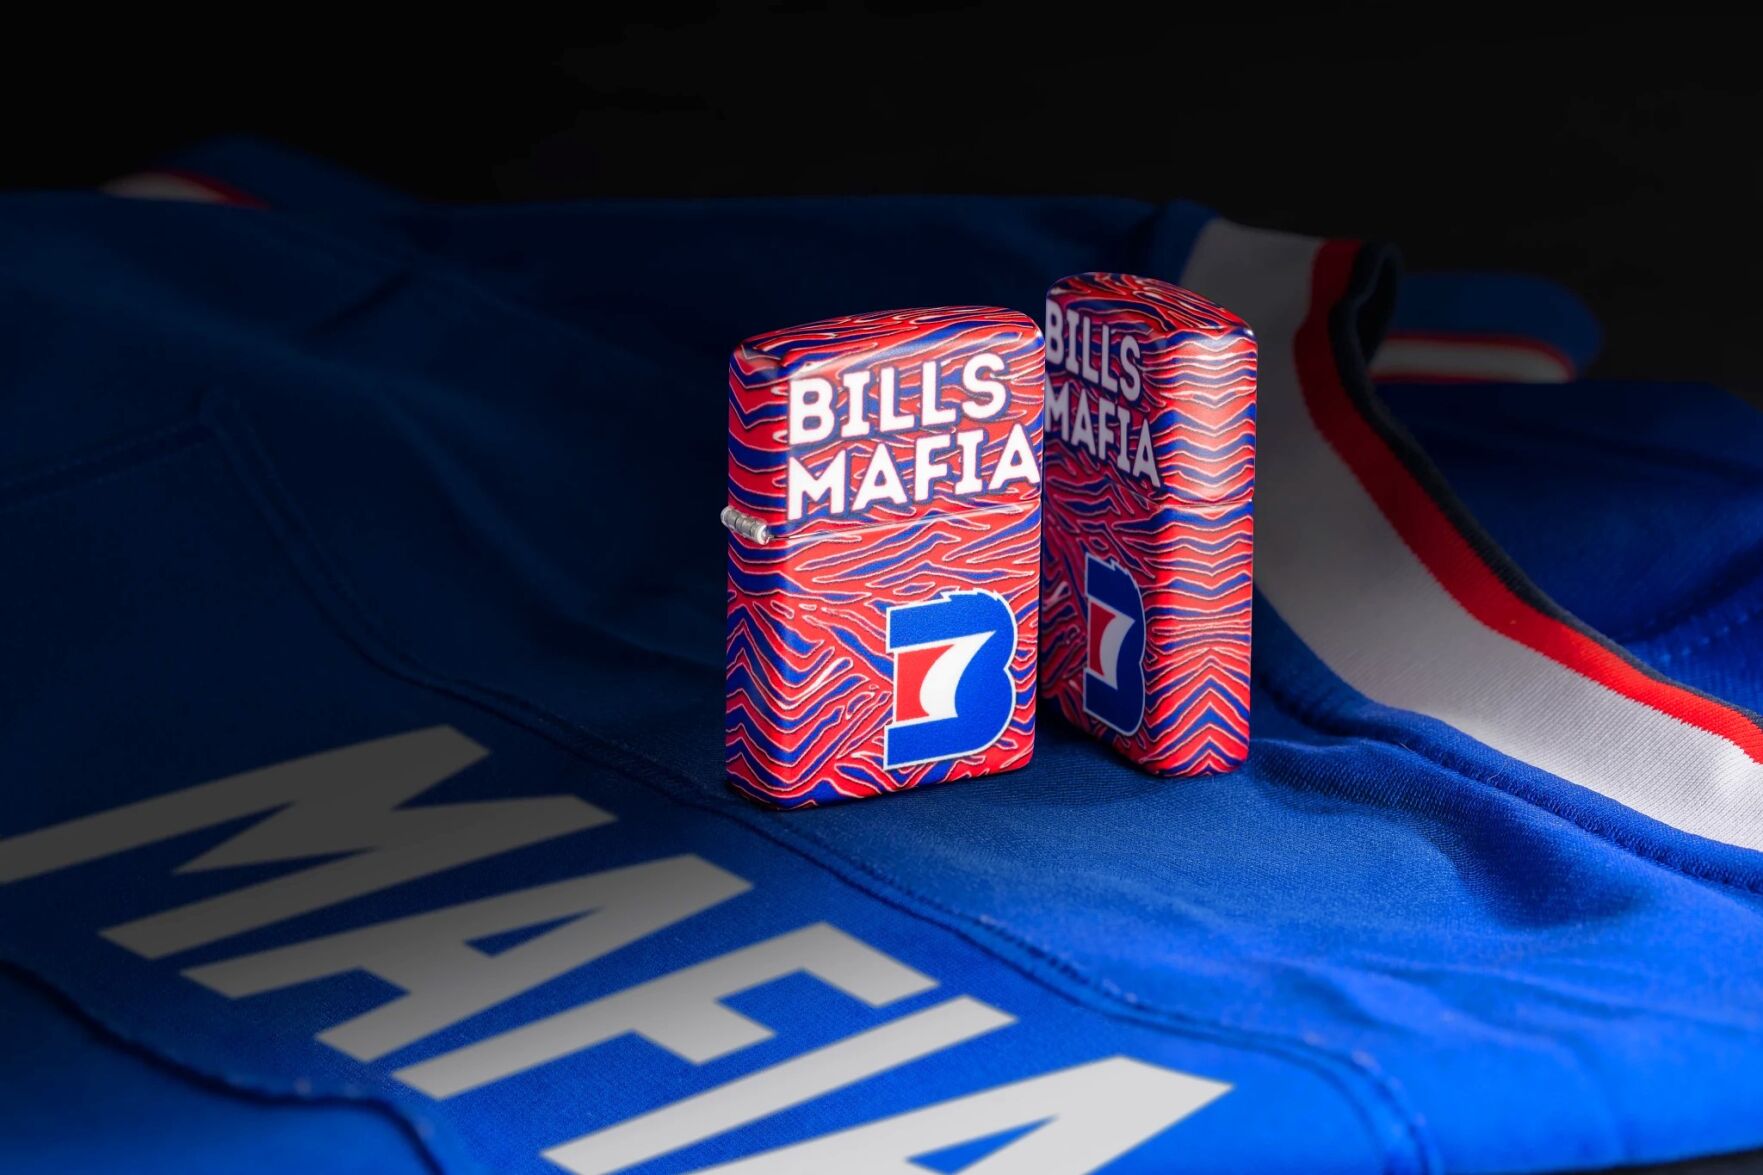 Buffalo Bills Zubaz Apparel | The Bills Store